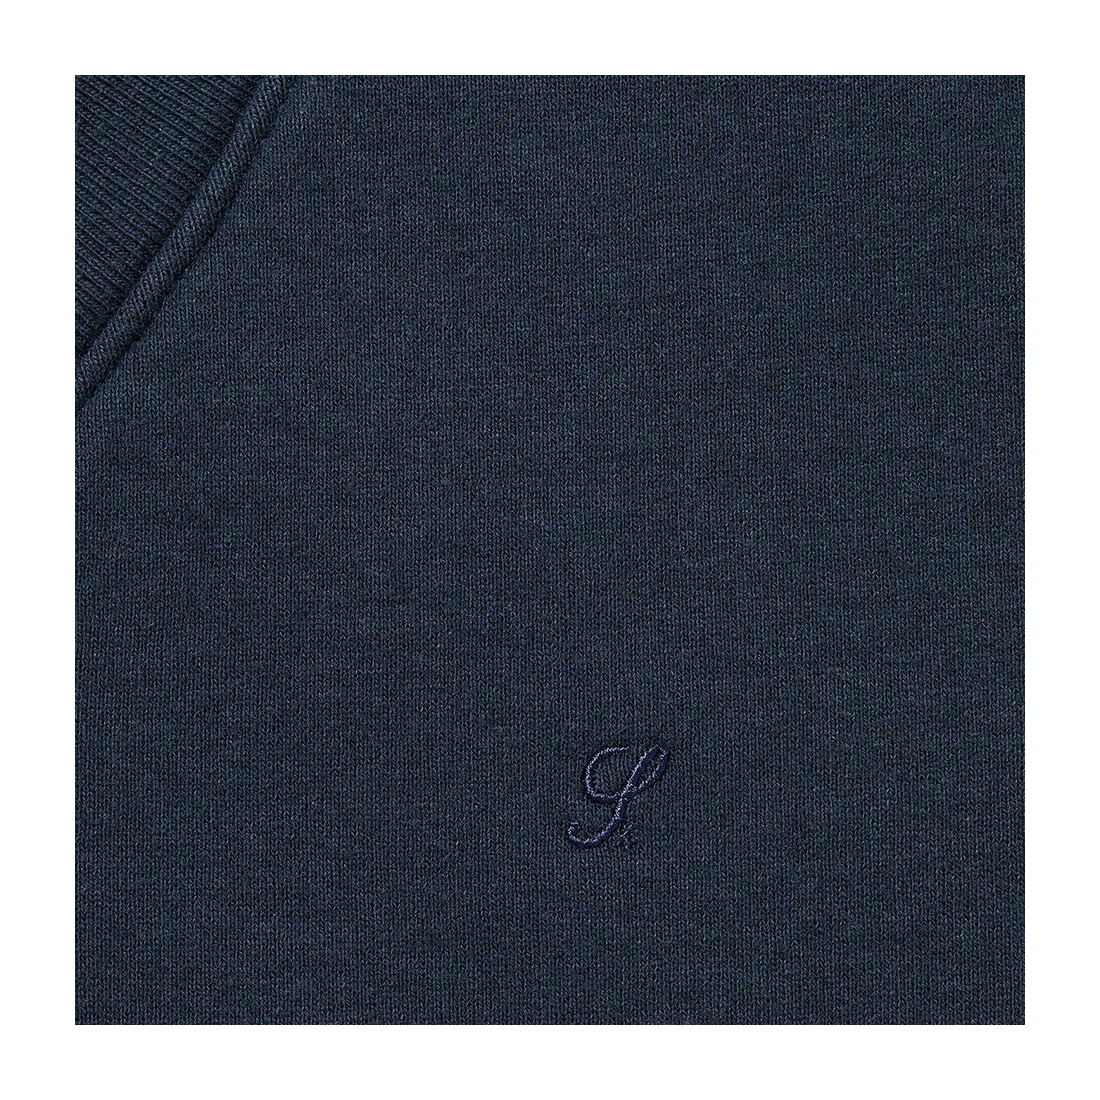 Details on Sweatshirt Vest Navy from spring summer
                                                    2023 (Price is $128)